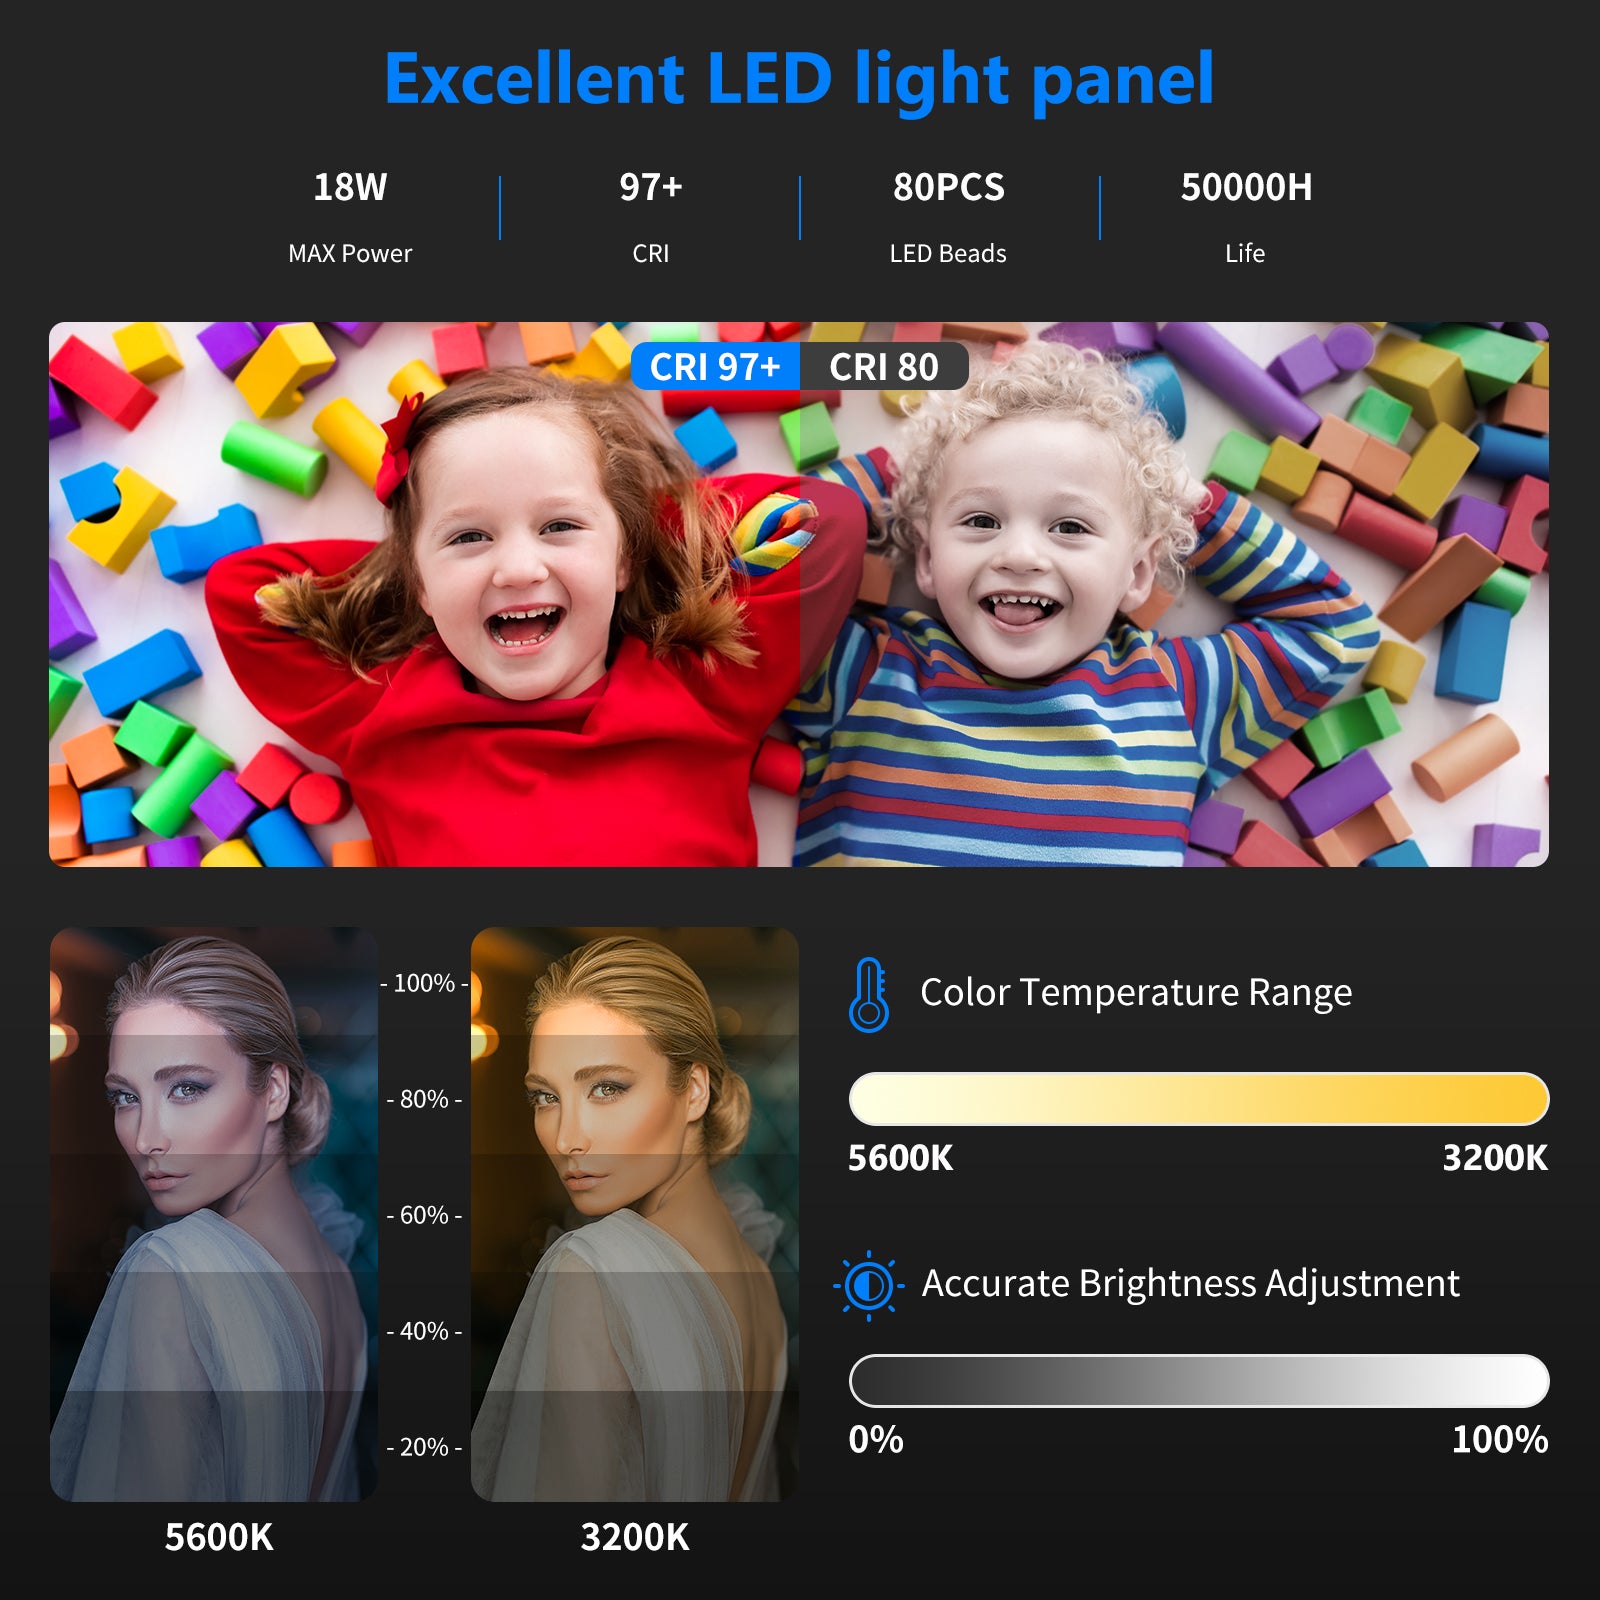 Neewer C80 Foldable LED Light Panel Kit